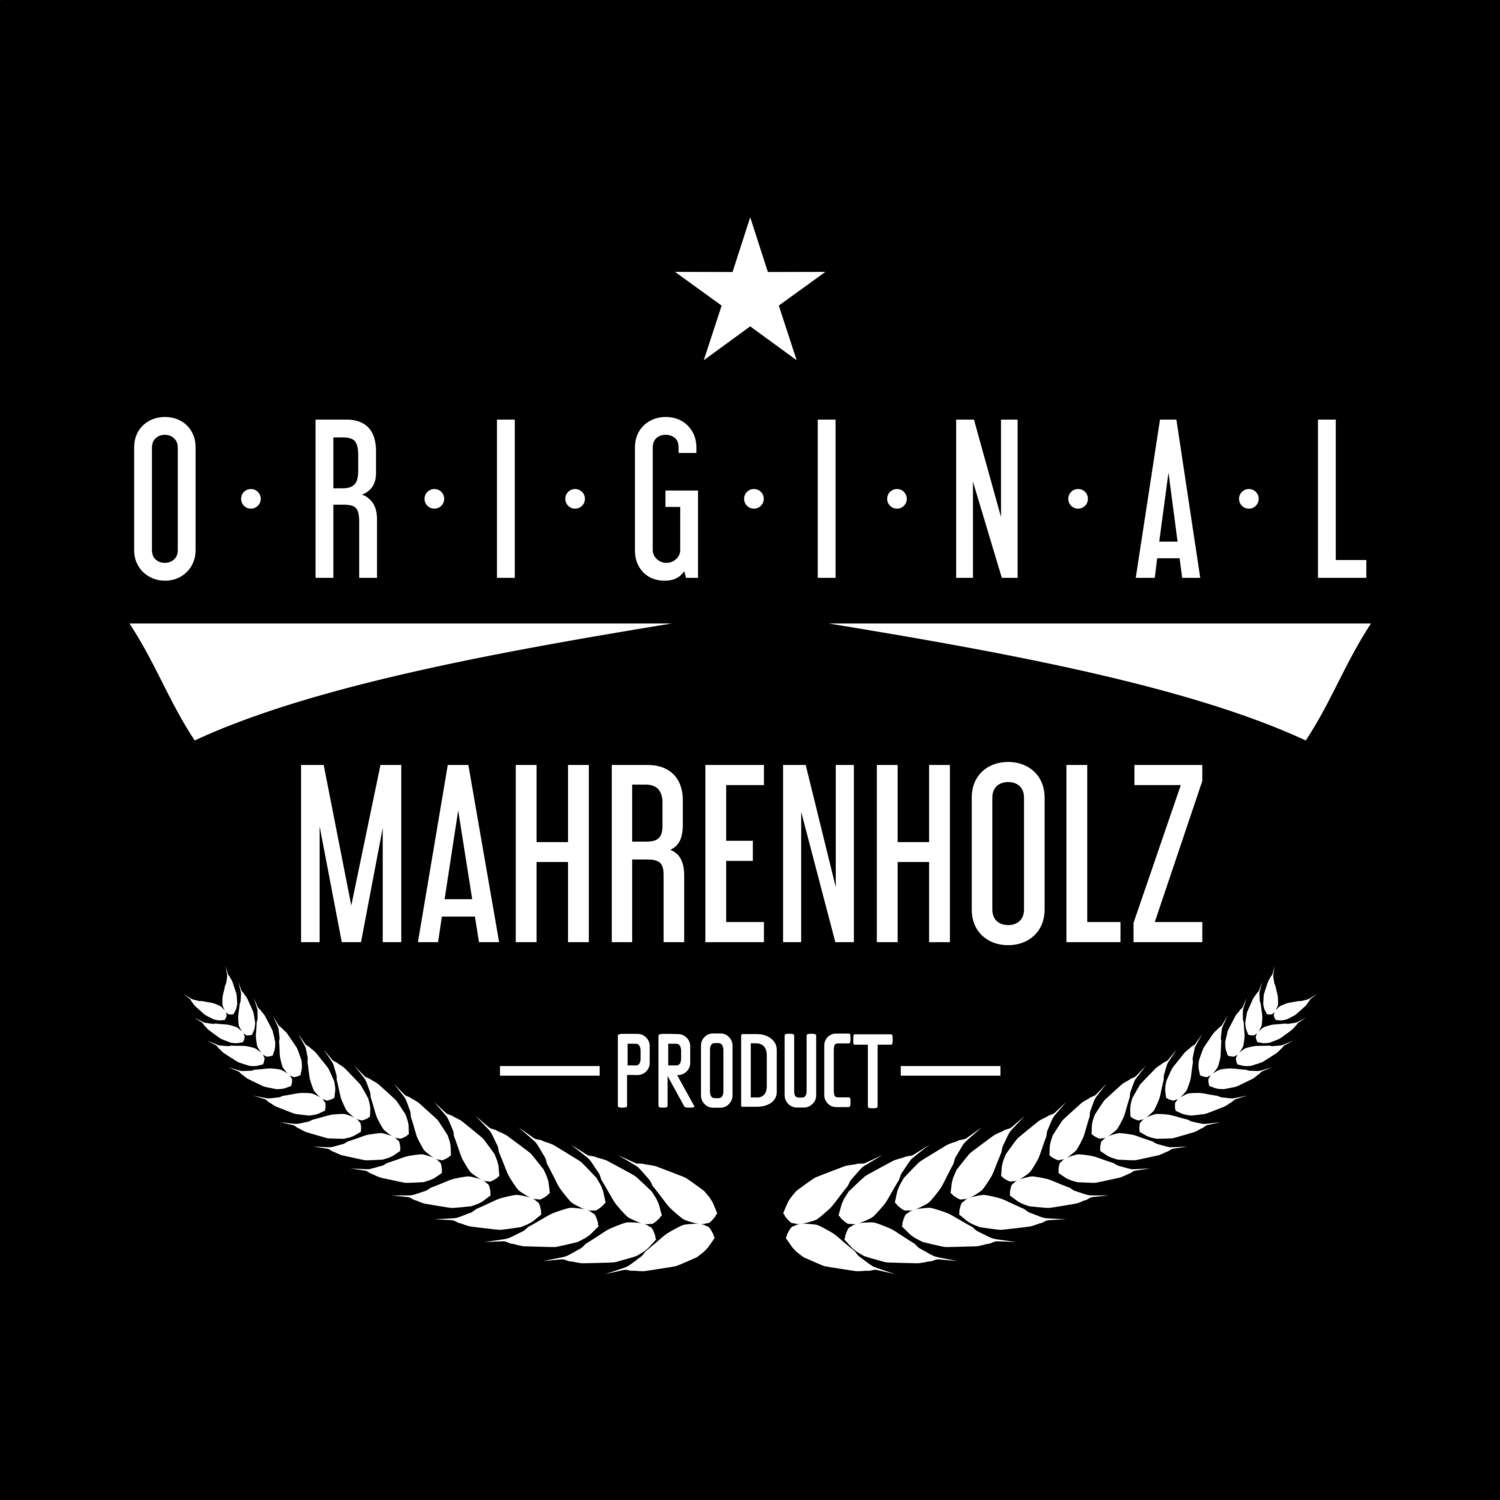 Mahrenholz T-Shirt »Original Product«